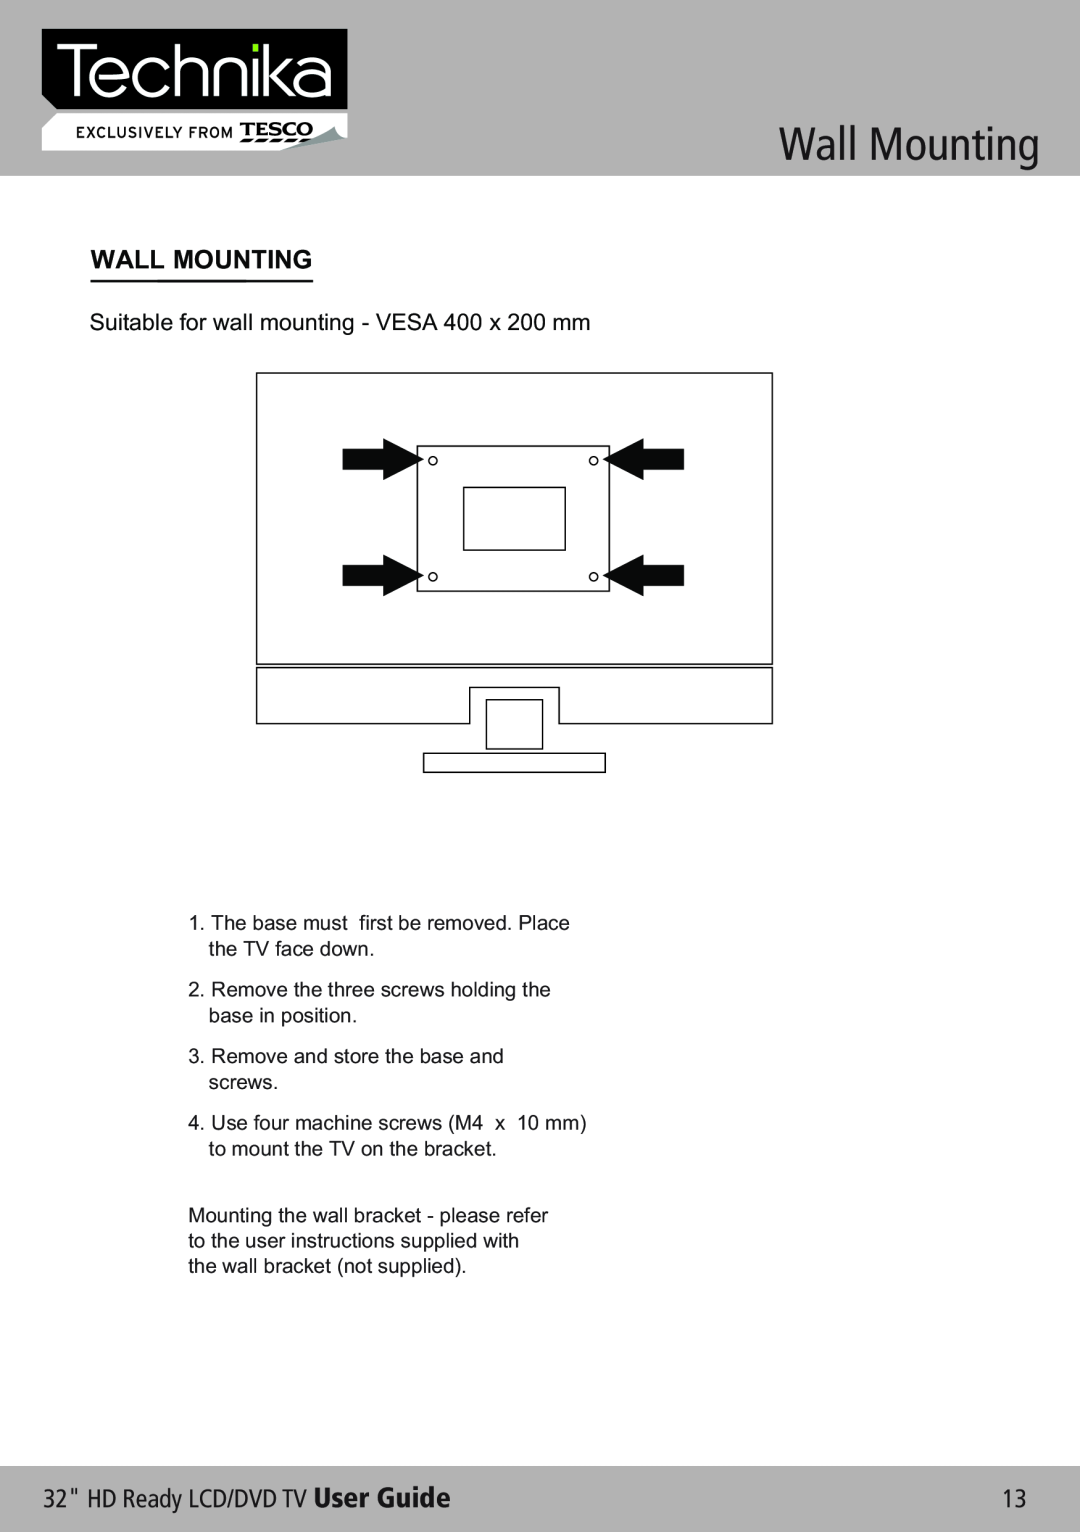 Technika 32-612 manual Wall Mounting, HD Ready LCD/DVD TV User Guide 